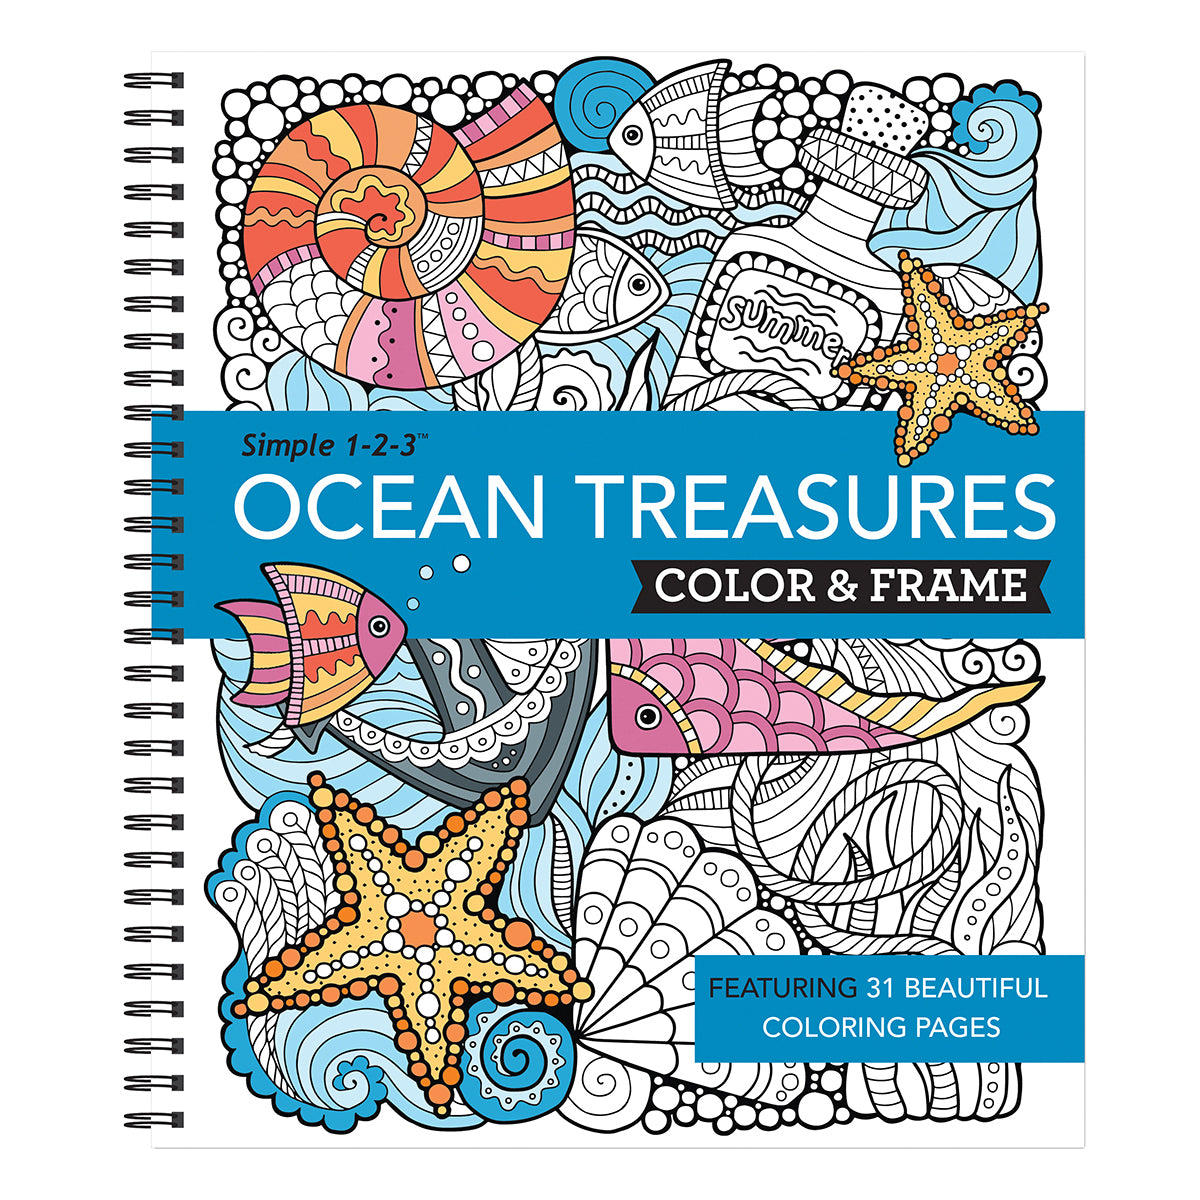 Color & Frame  Ocean Treasures Adult Coloring Book